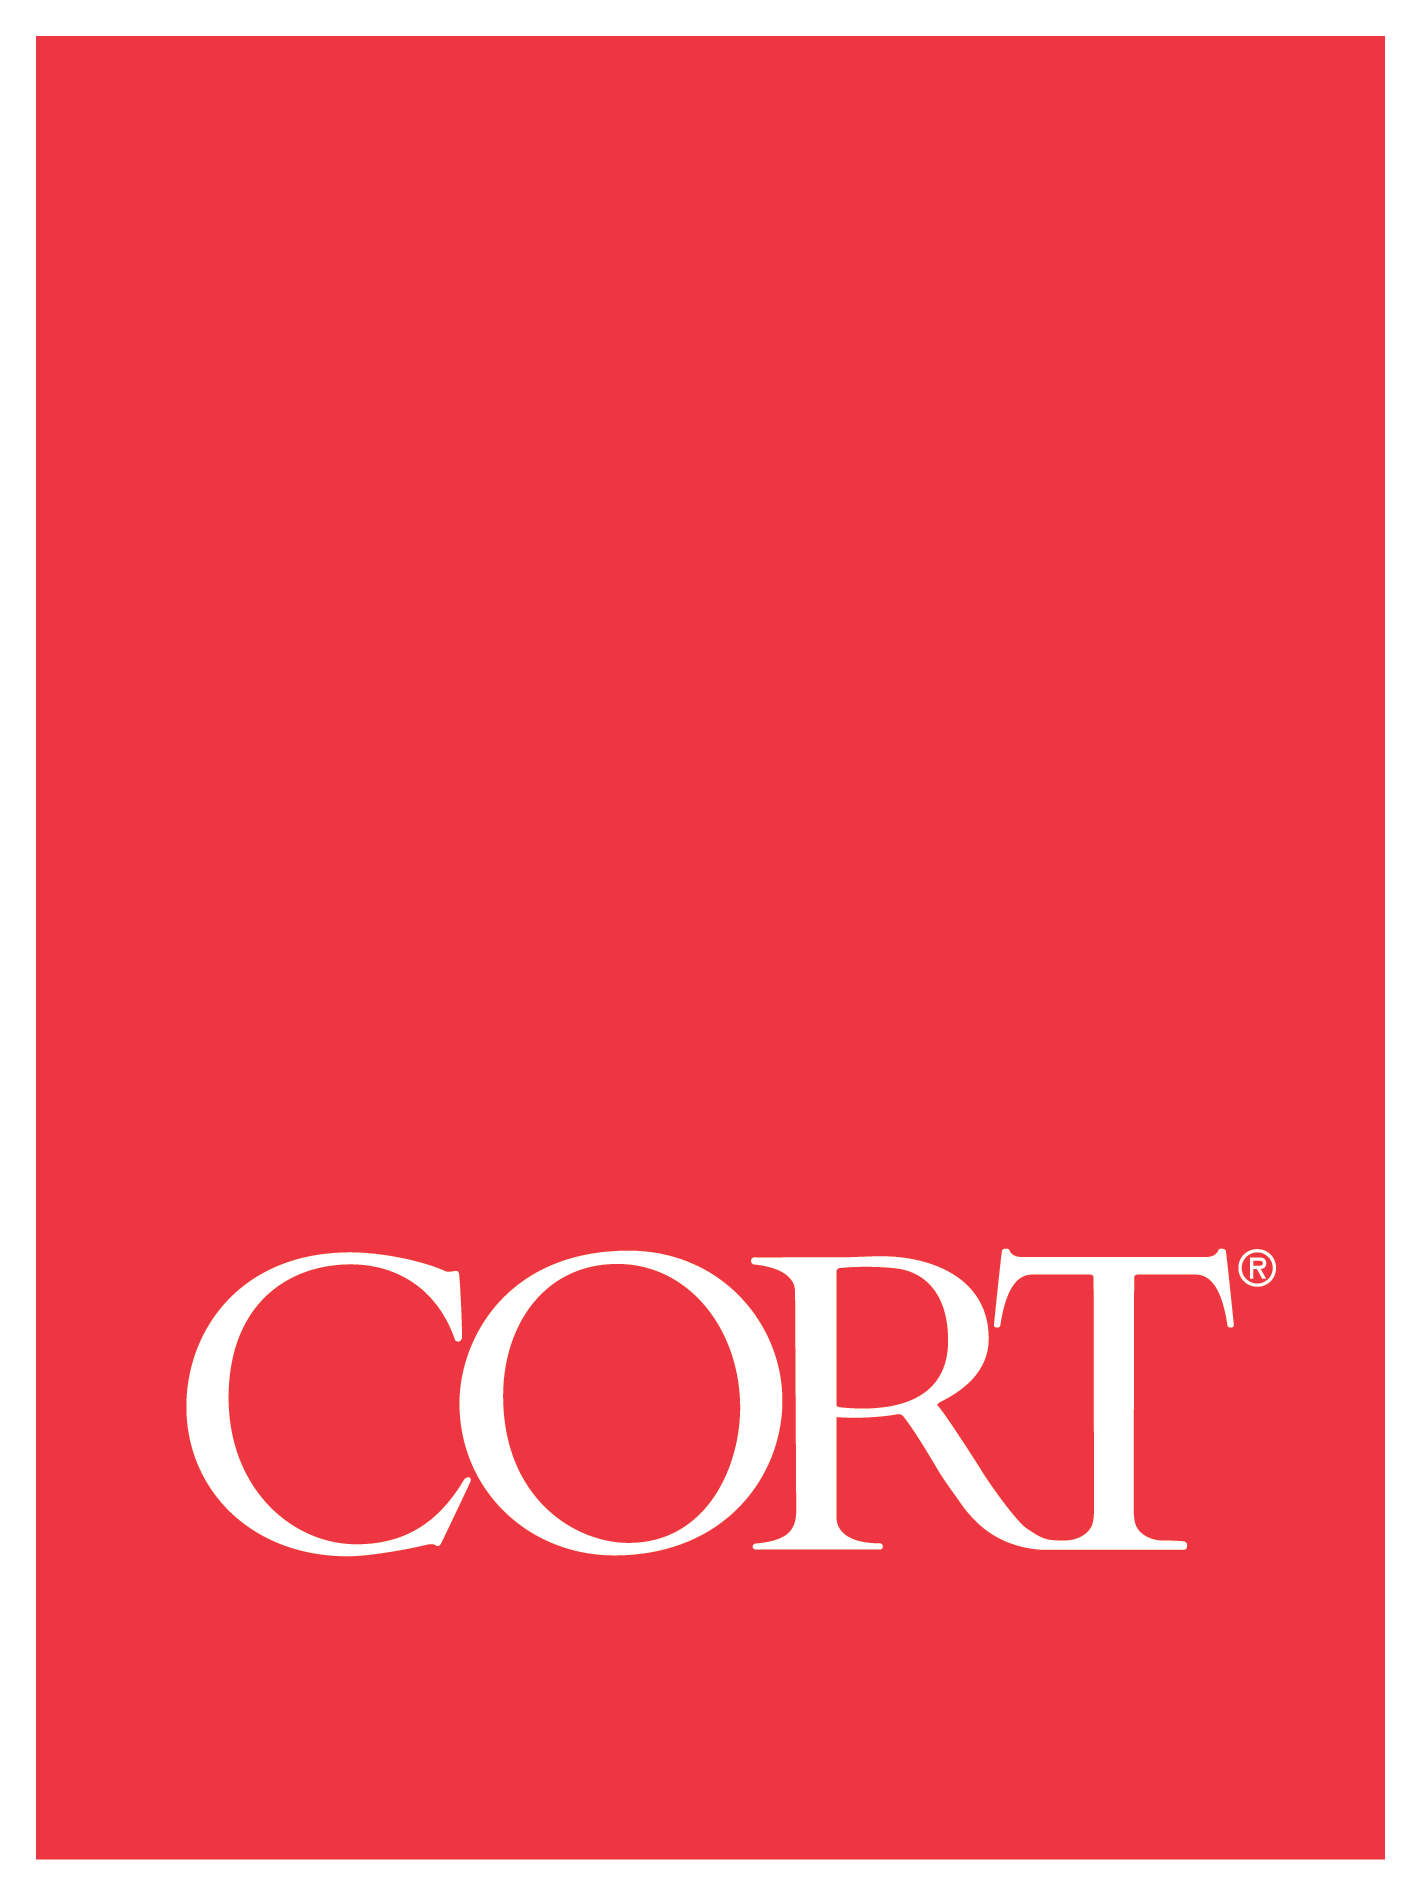 cort logo